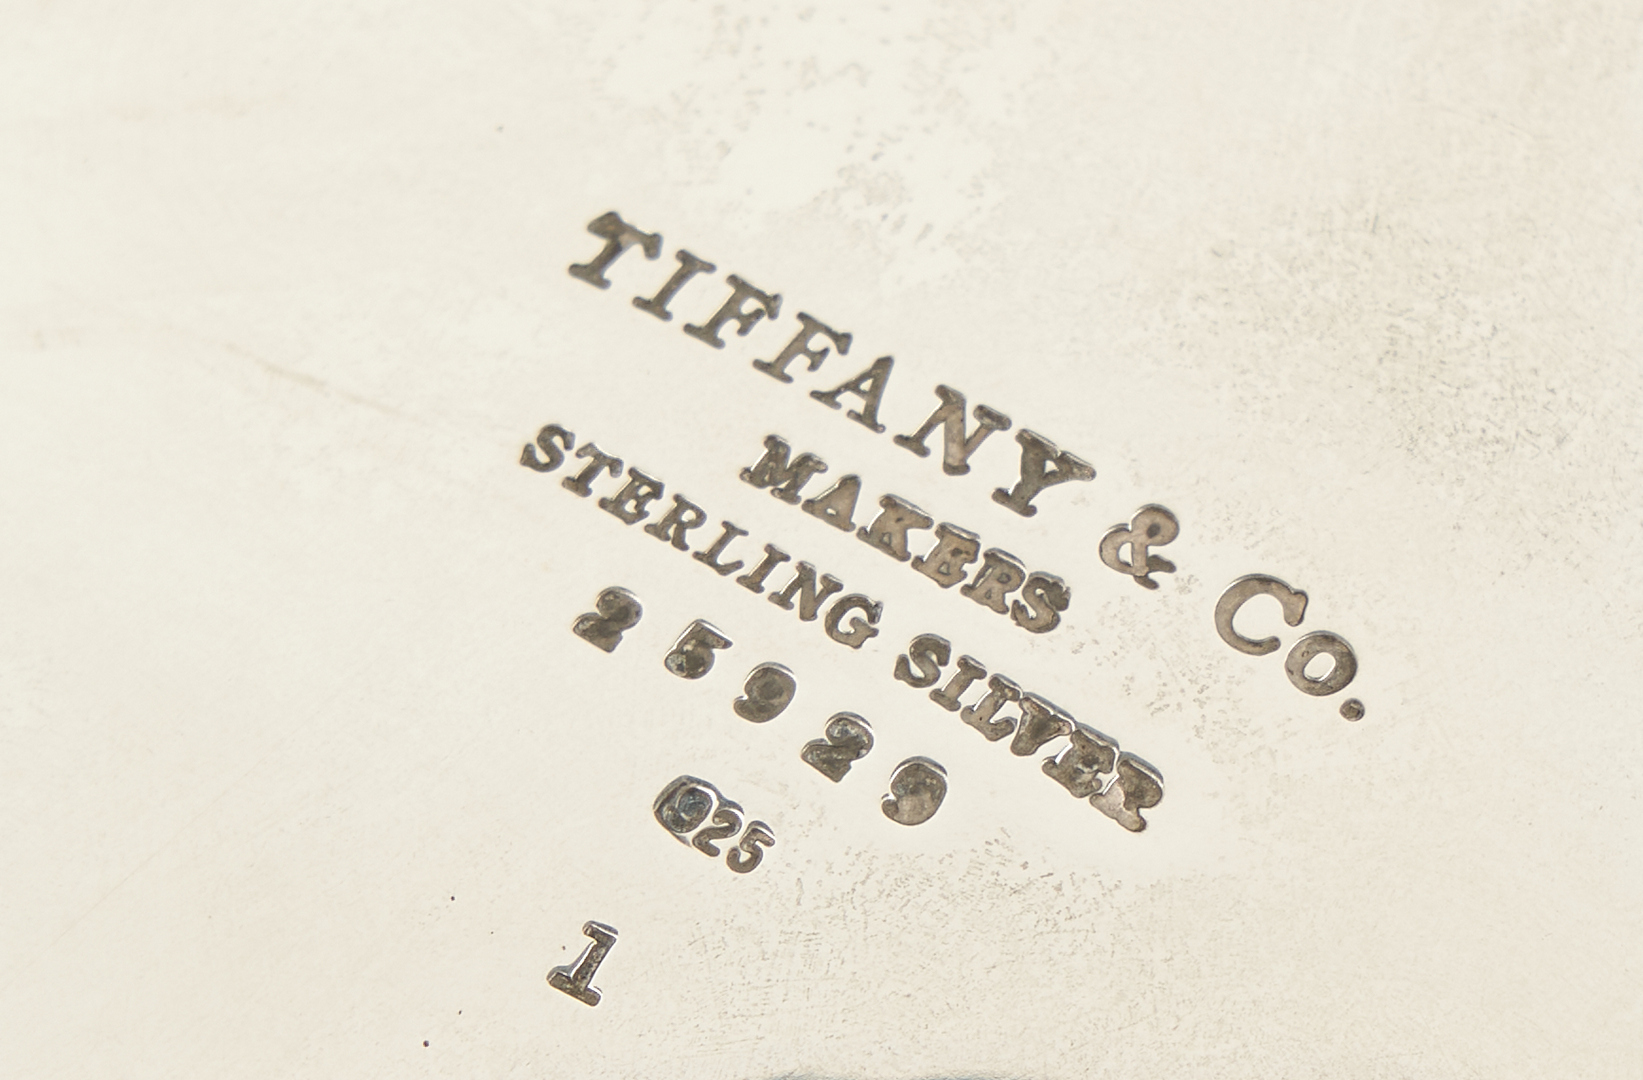 Lot 802: Tiffany Sterling Silver 4-Piece Tea Set